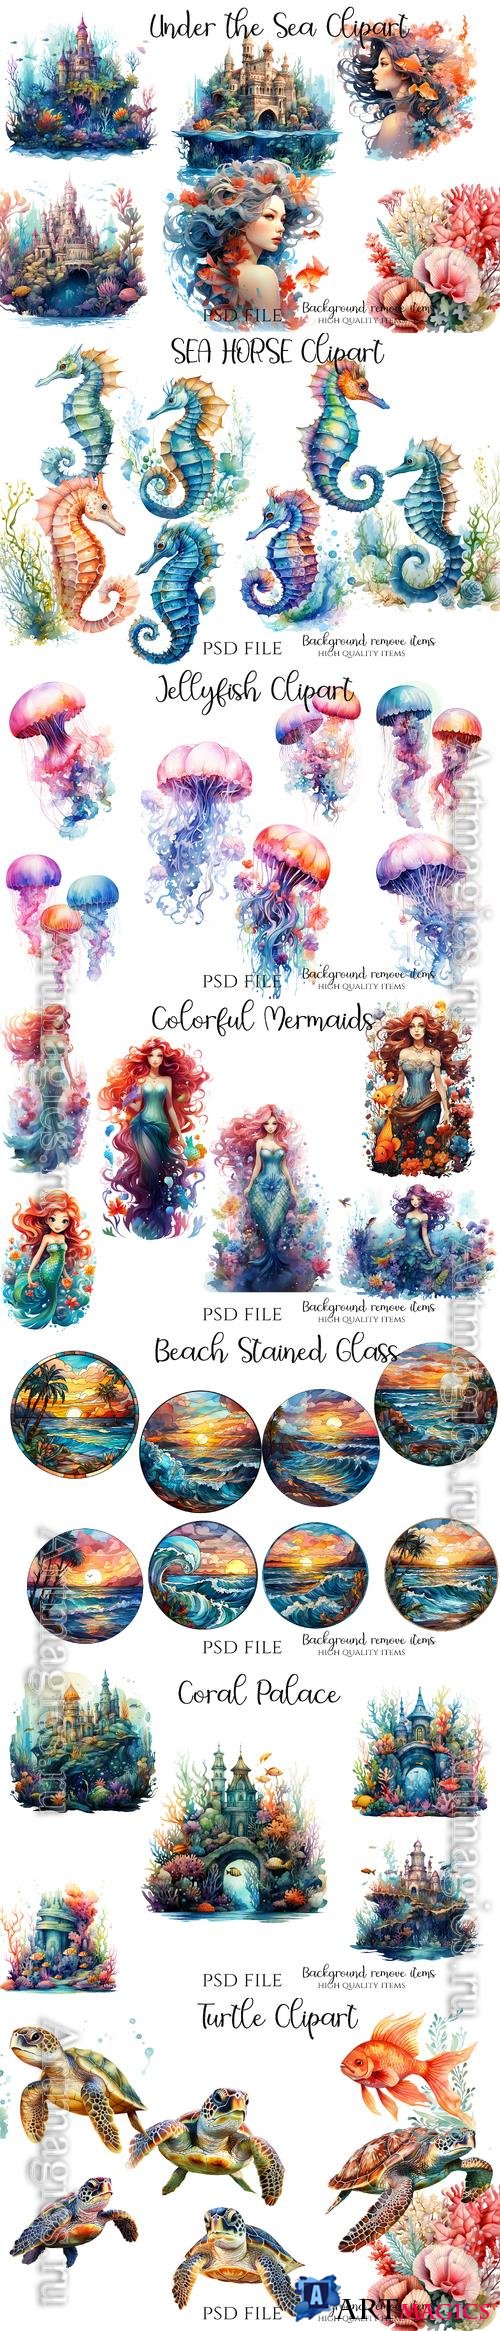 Sea creatures and elements, mermaids, seahorse, turtle, corals, seascape - PSD illustration cliparts set